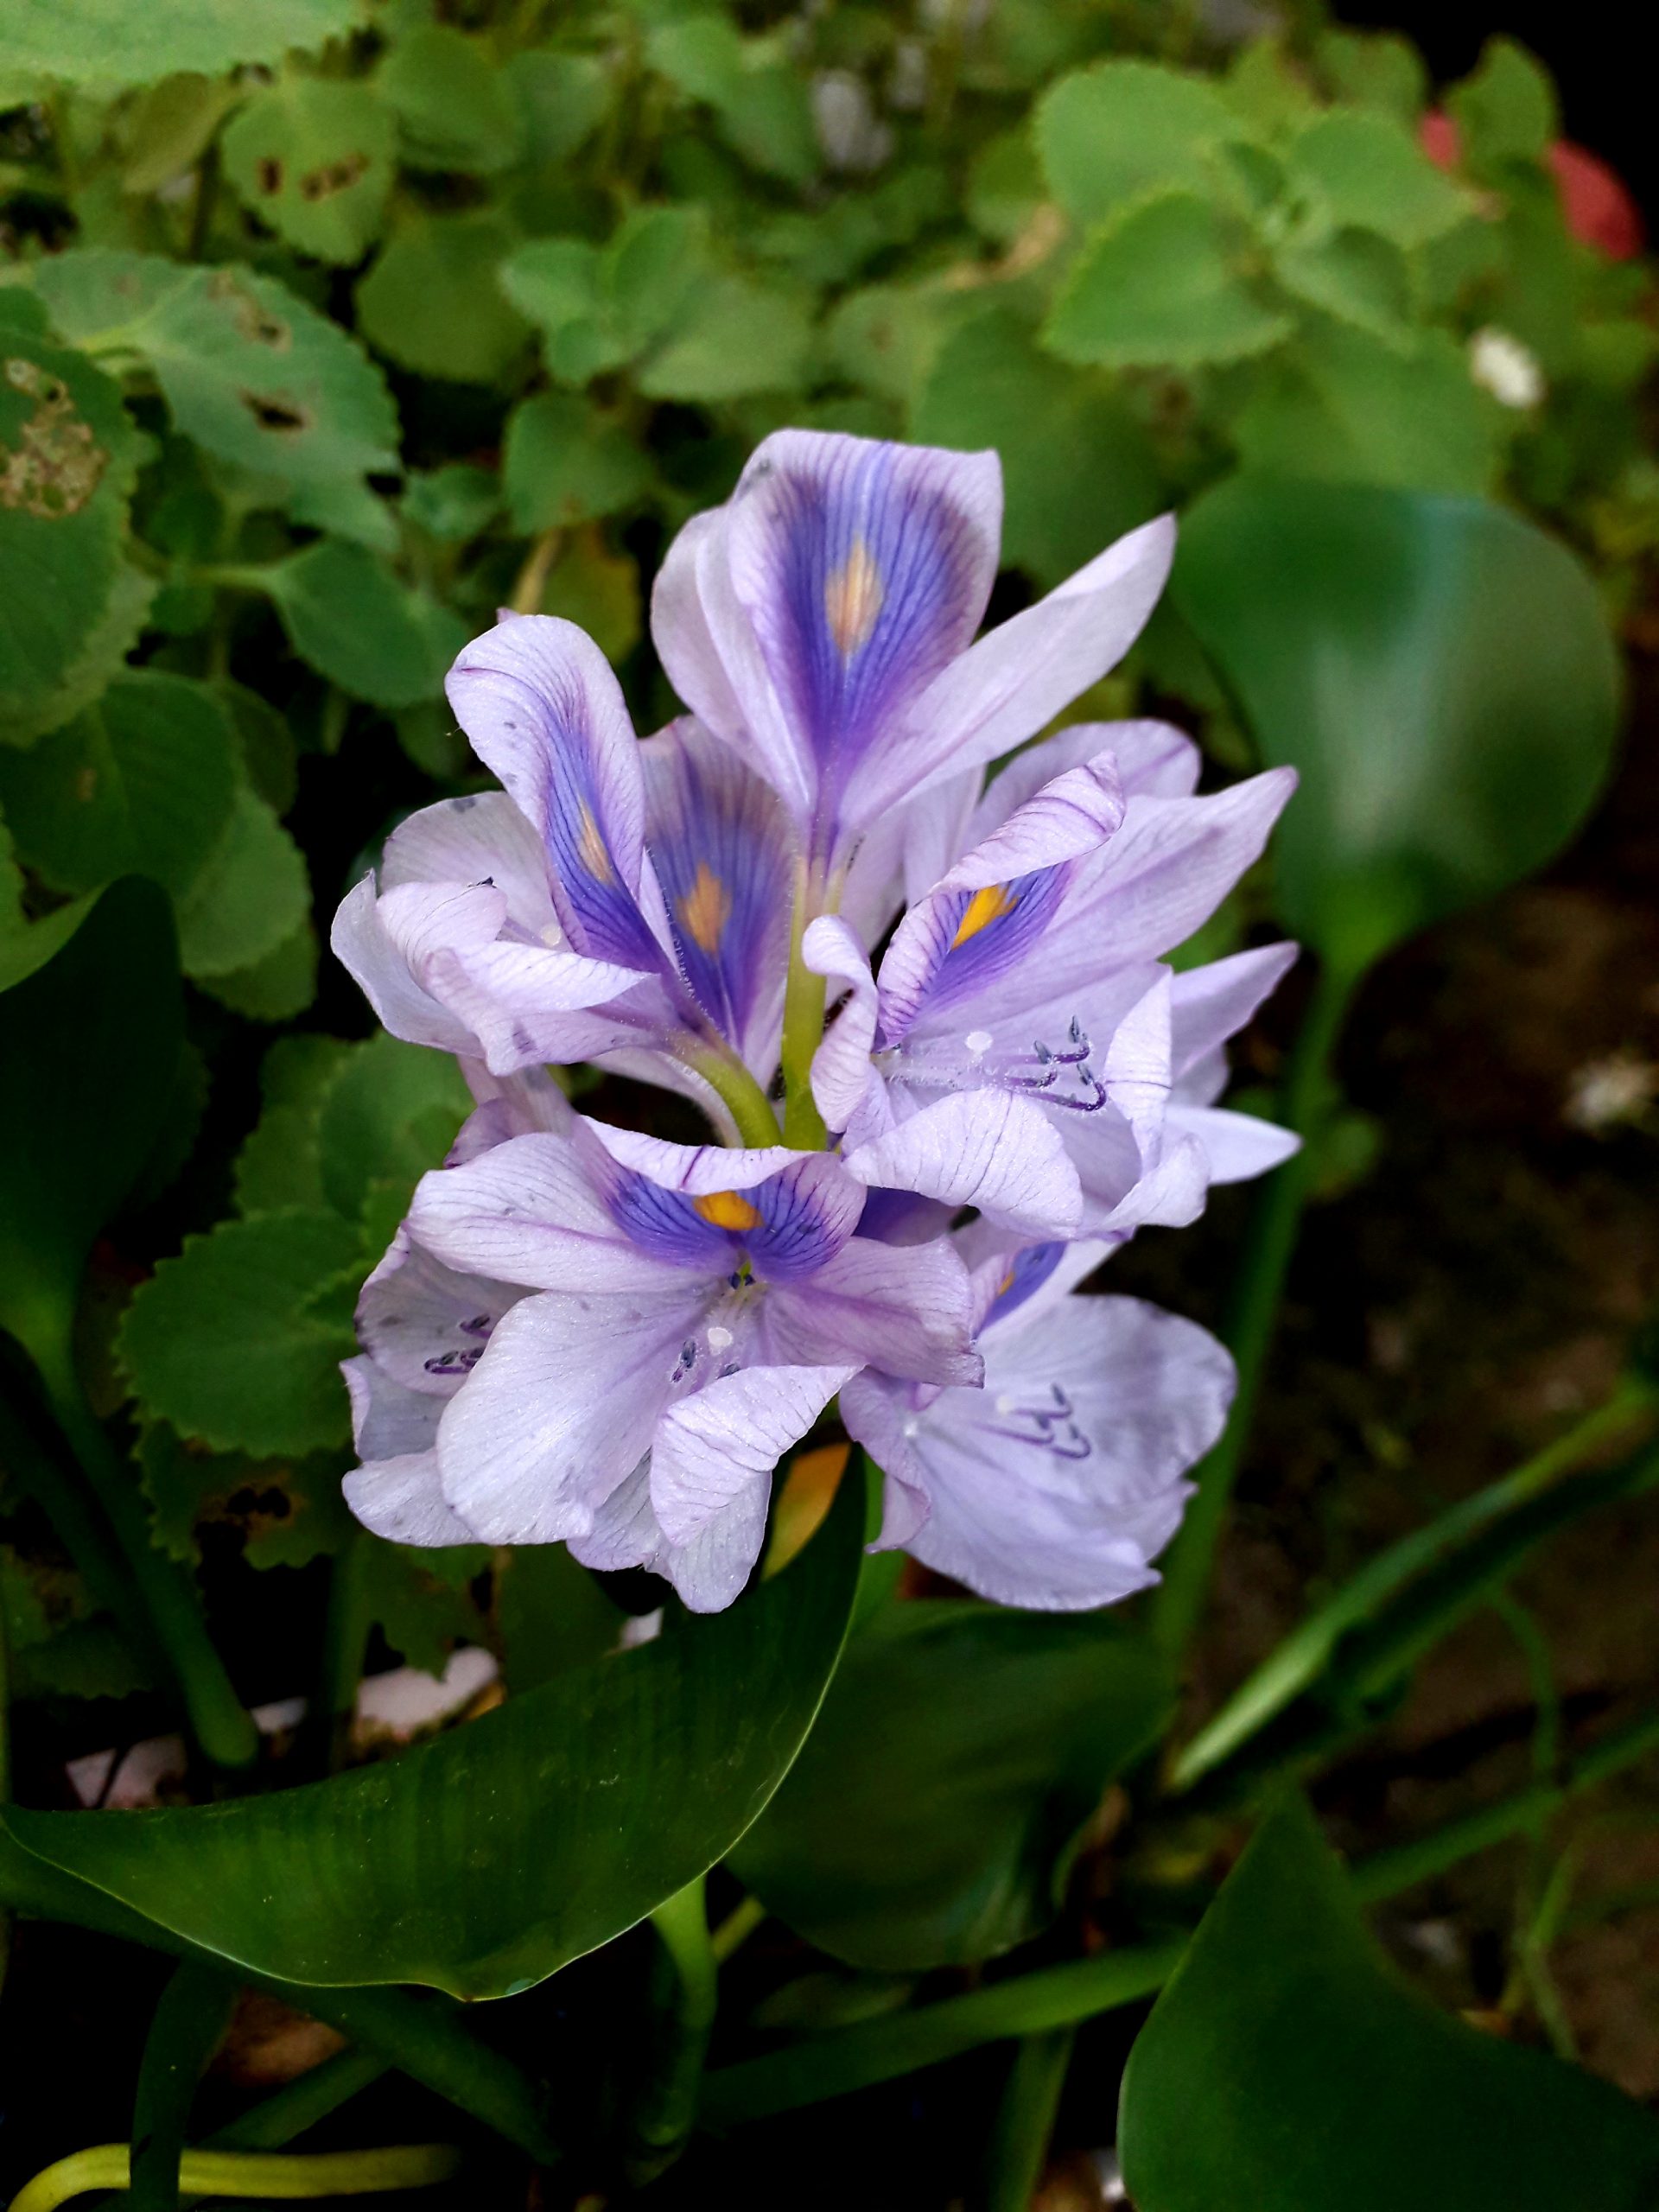 water hyacinth flower